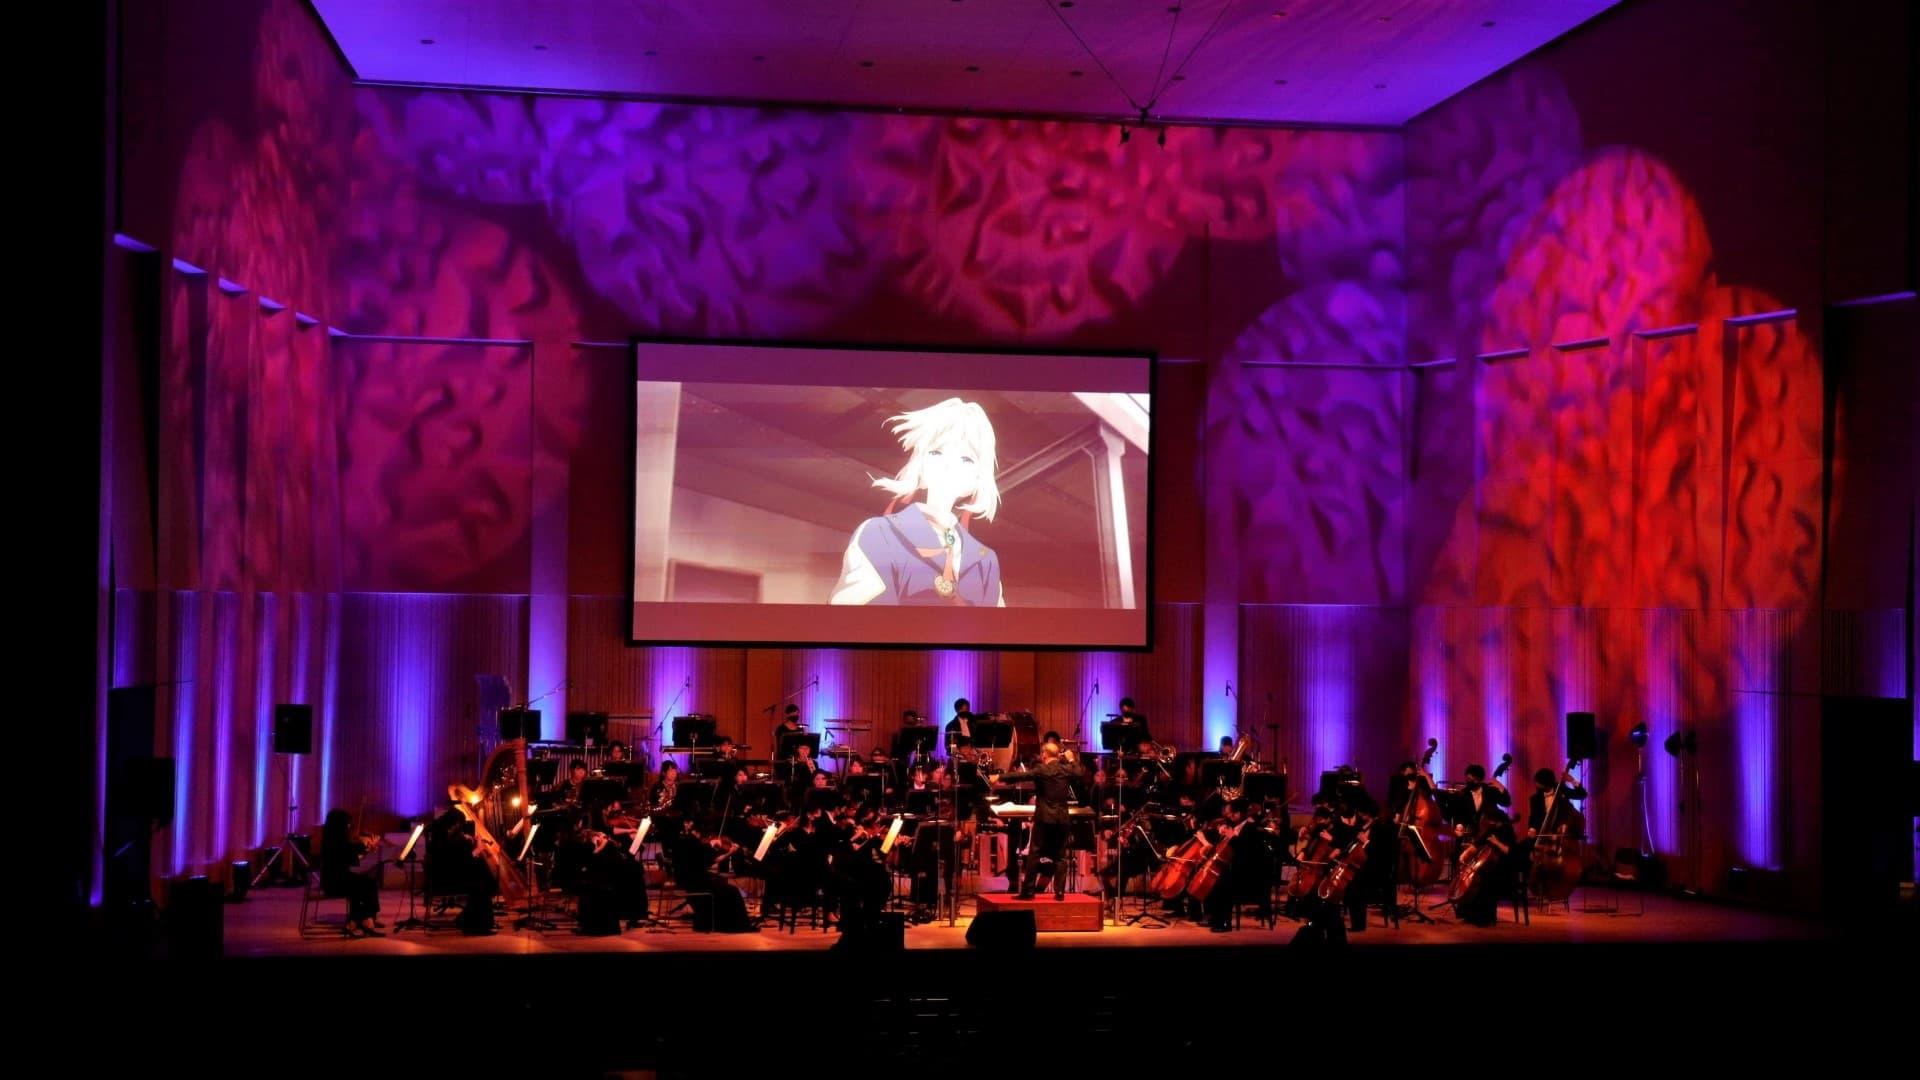 Violet Evergarden Orchestra Concert 2021 backdrop